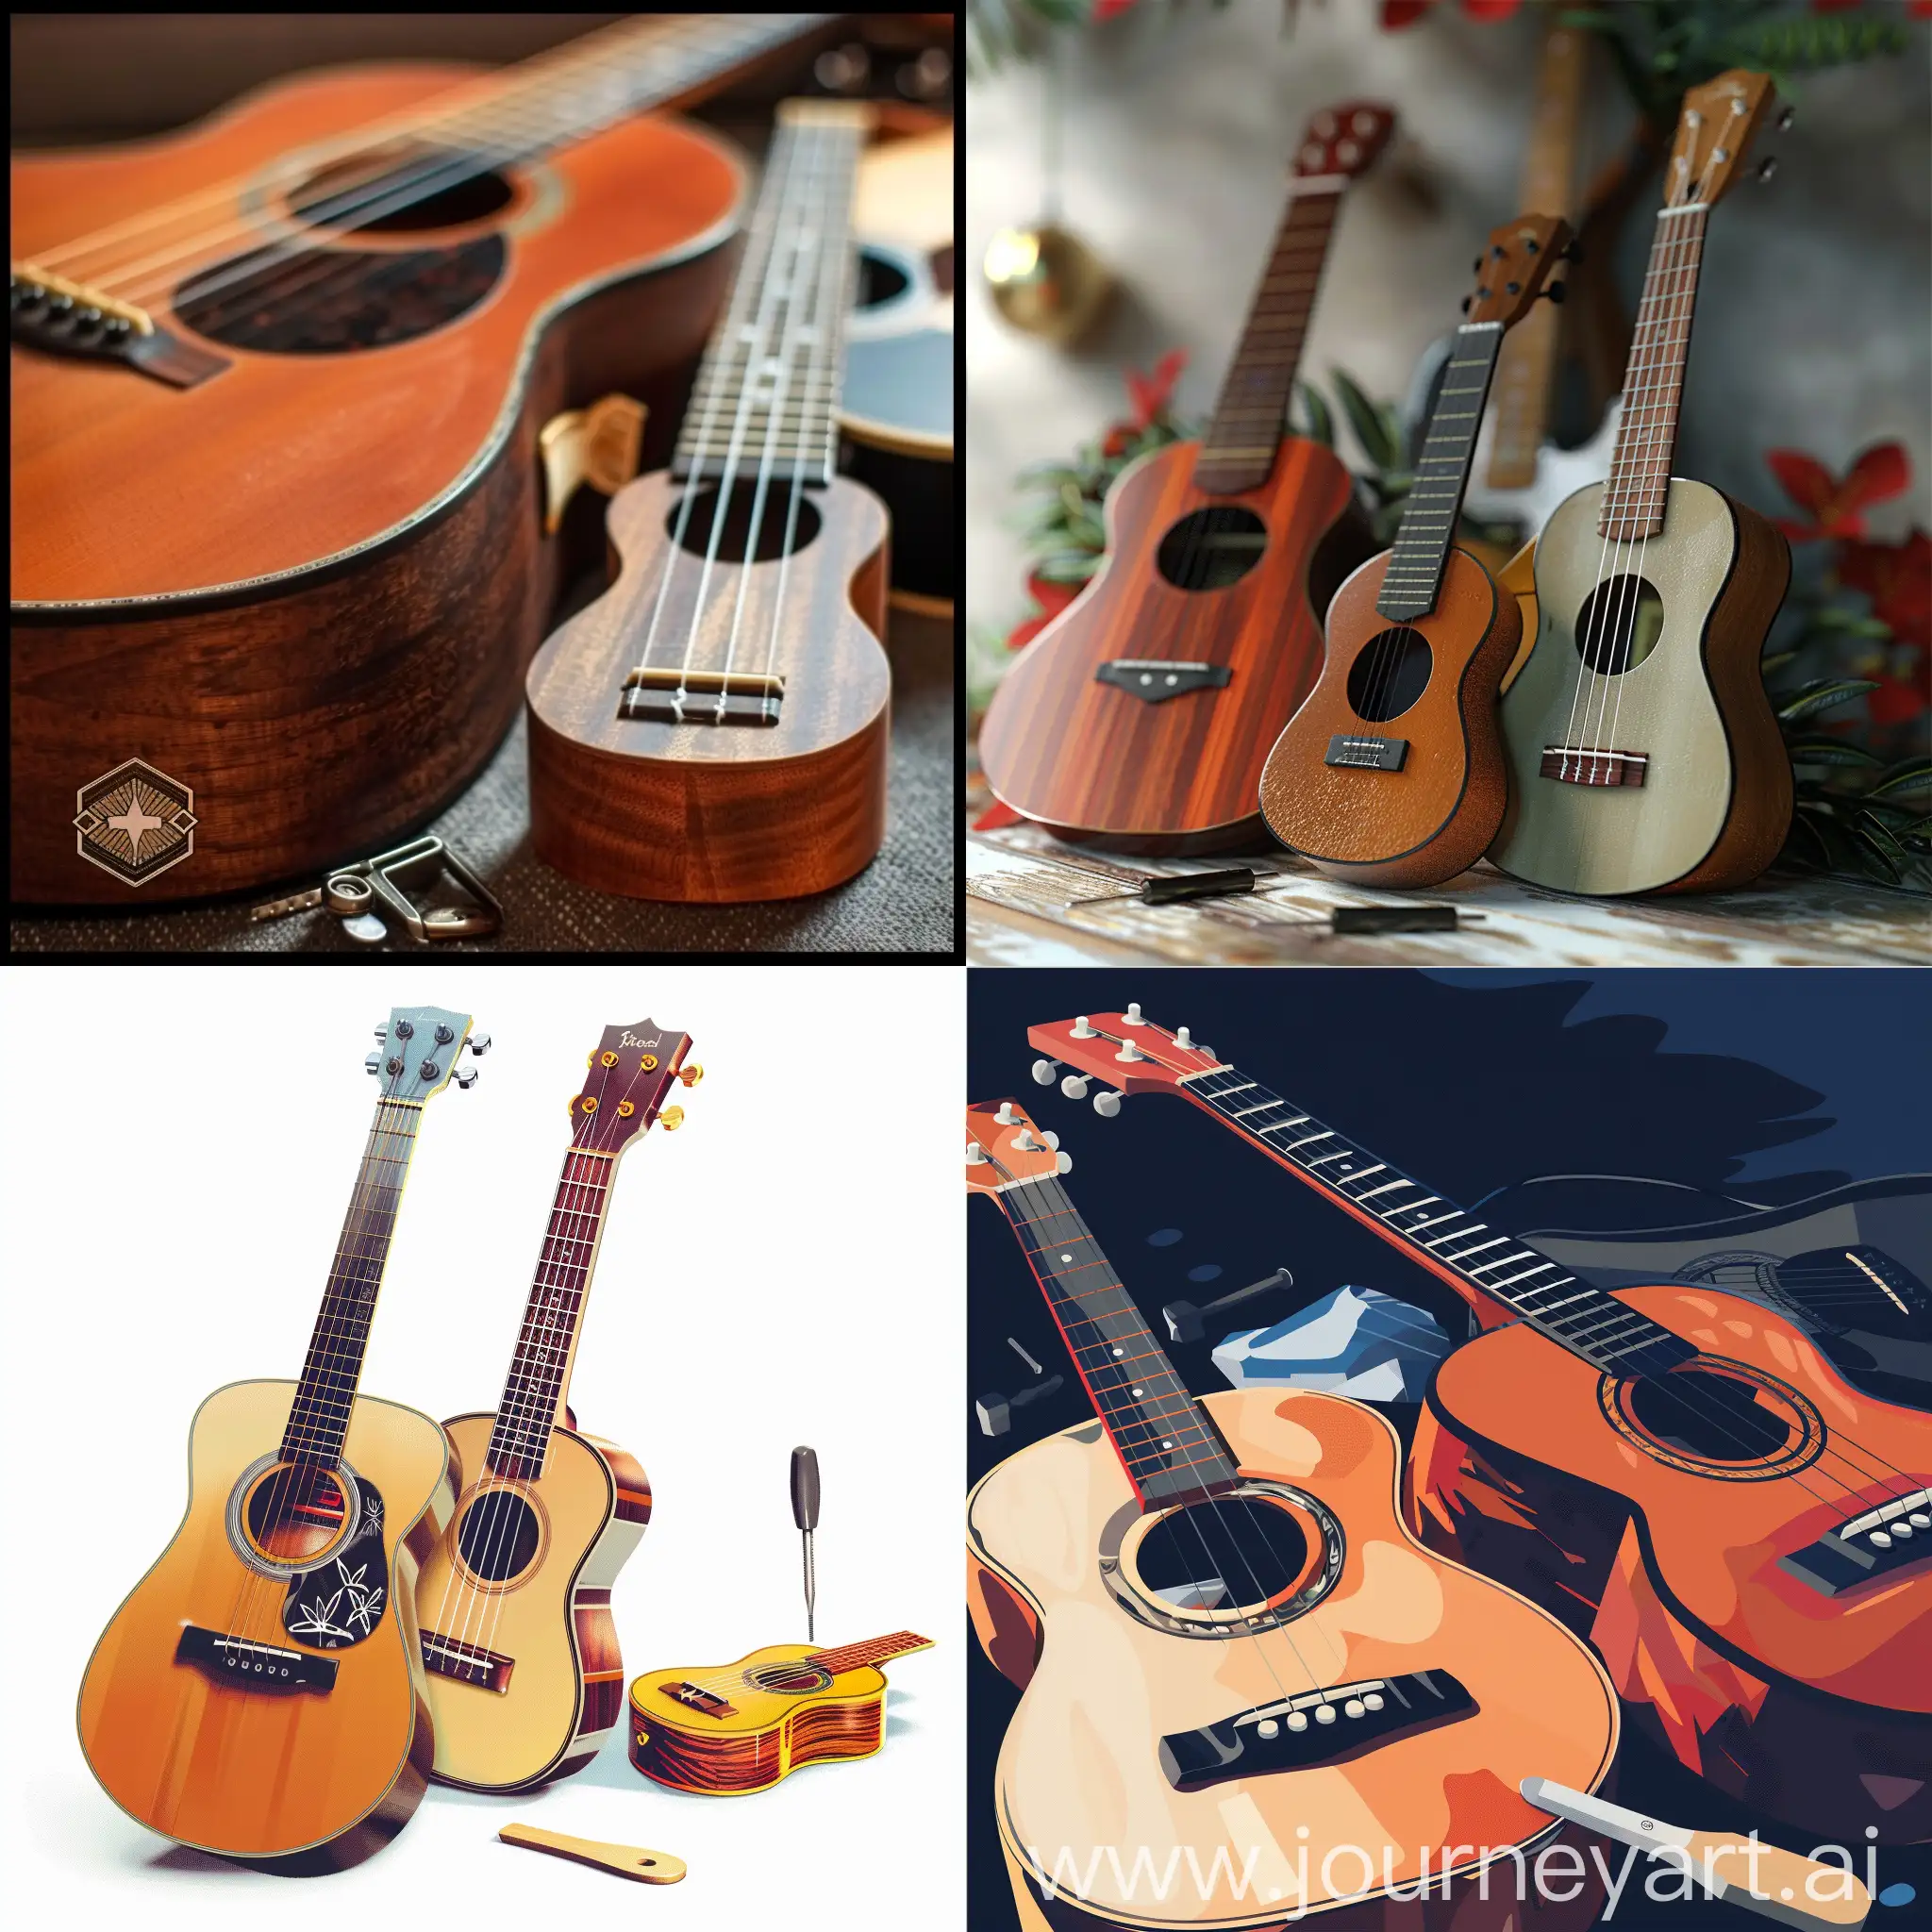 Logo branding chaîne Youtube tutoriel de guitare acoustique et ukulele. Inclure guitare acoustique, ukulele et pick de guitare en avant-plan